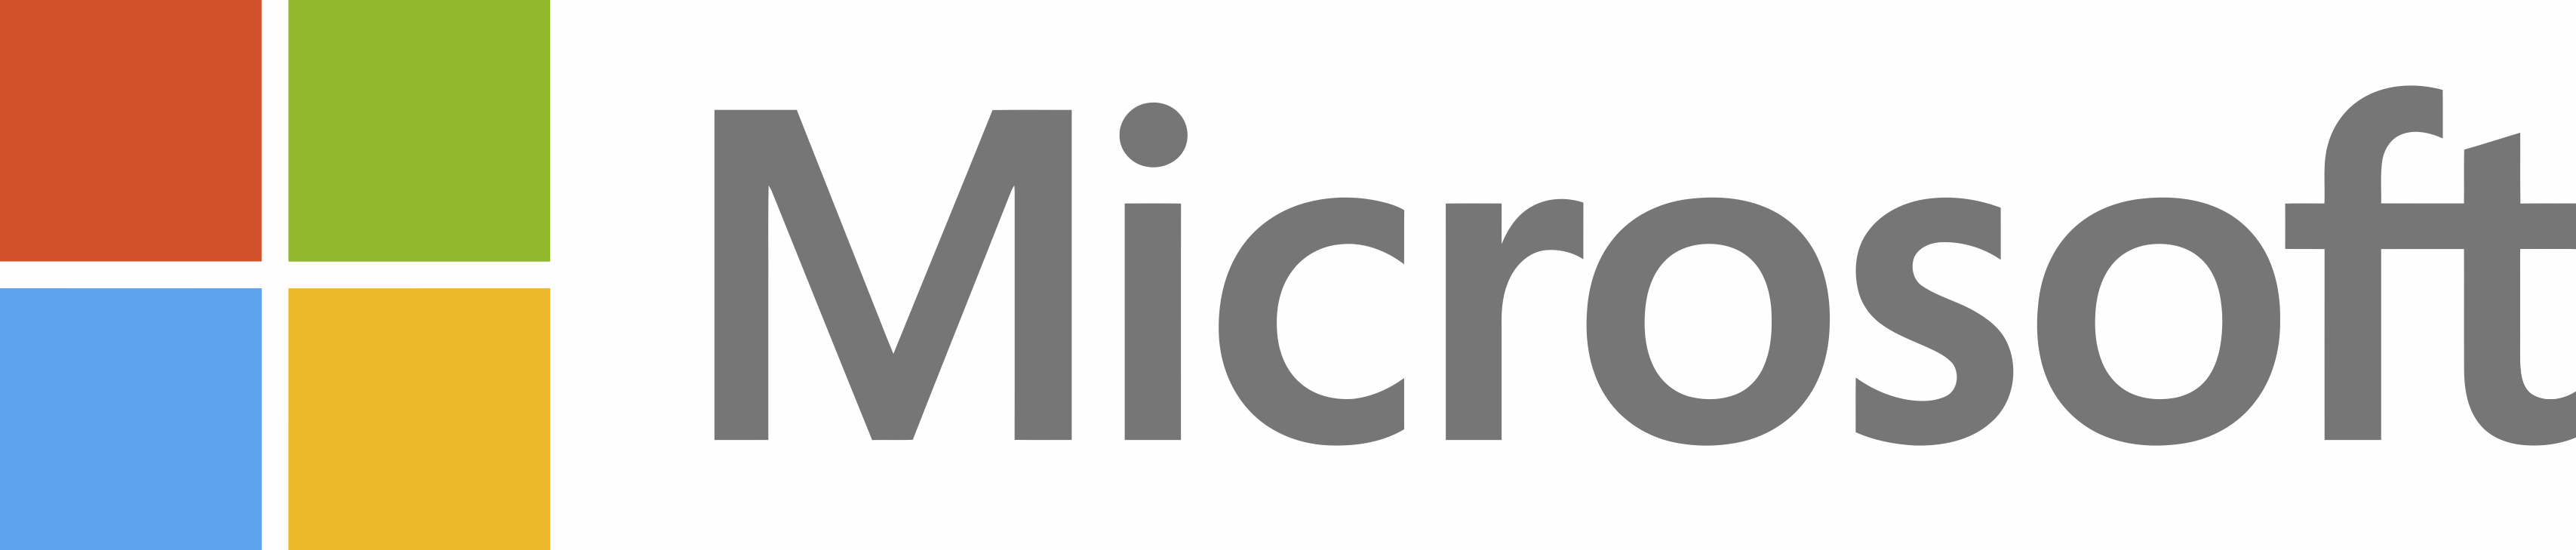 software company brand logo"